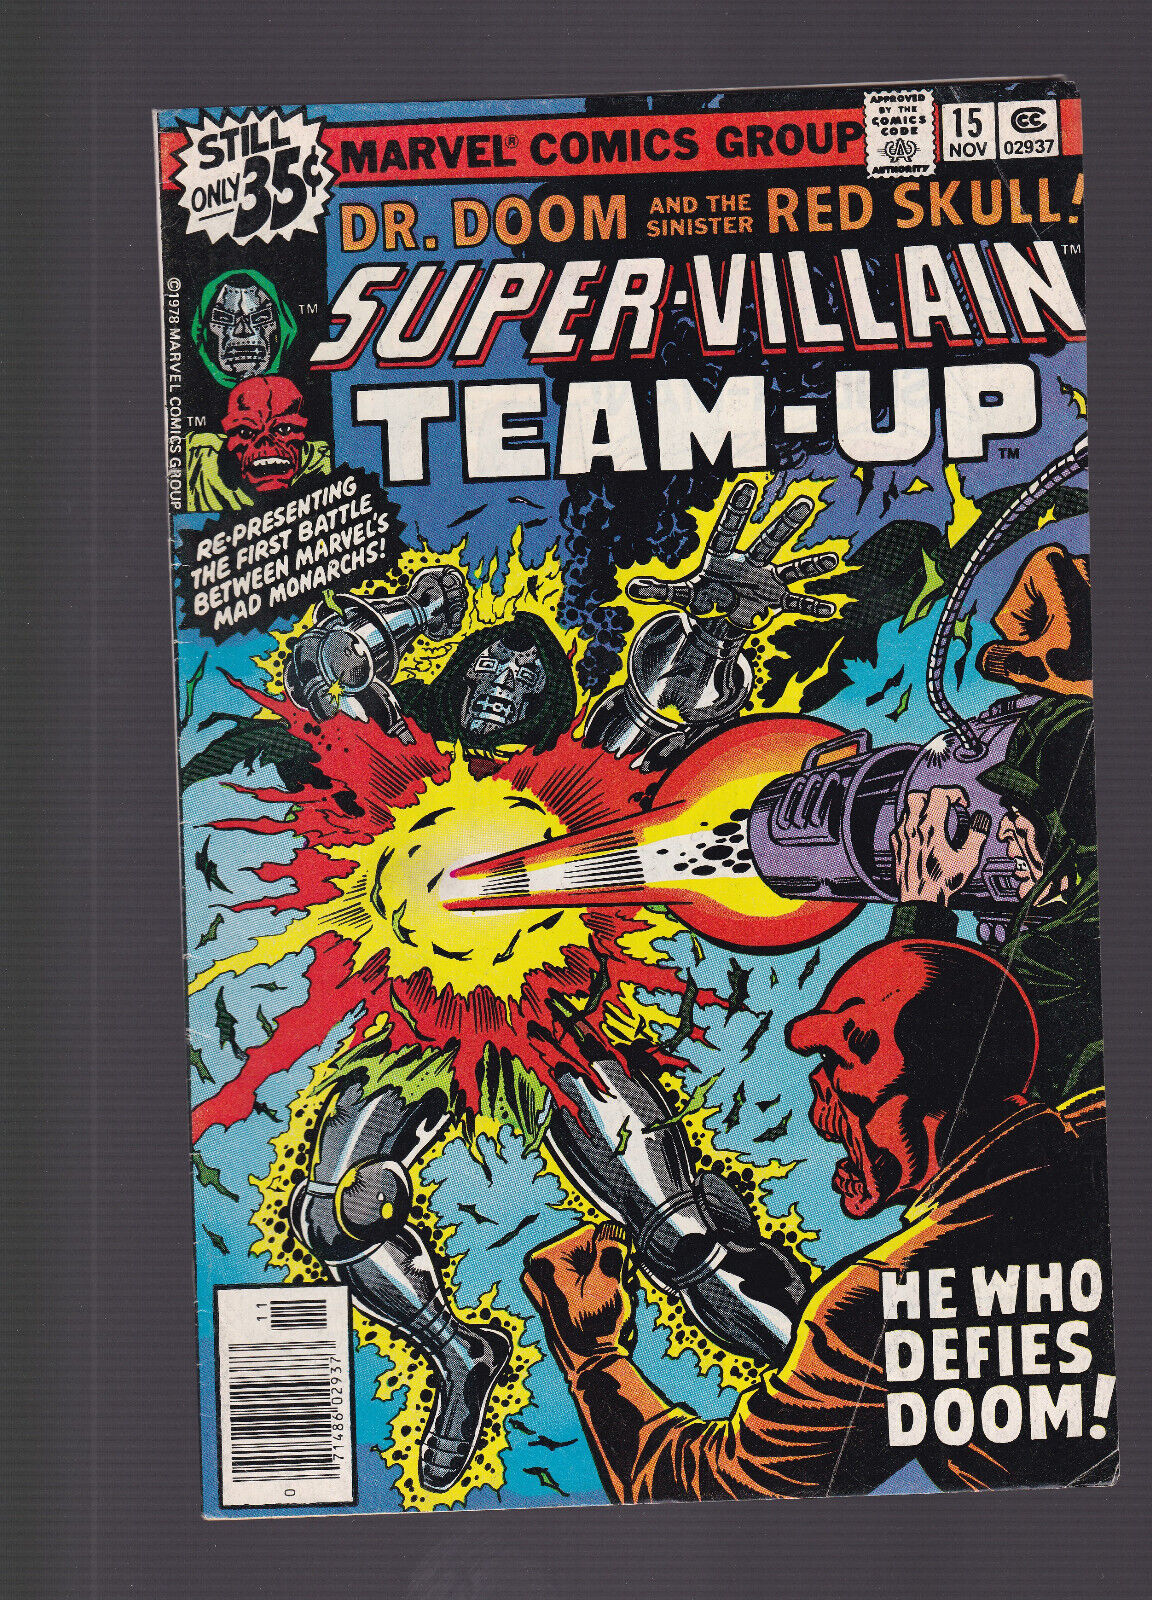 Super-Villain Team-Up #15 Dr. Doom returns to Latveria and defeats Red Skull